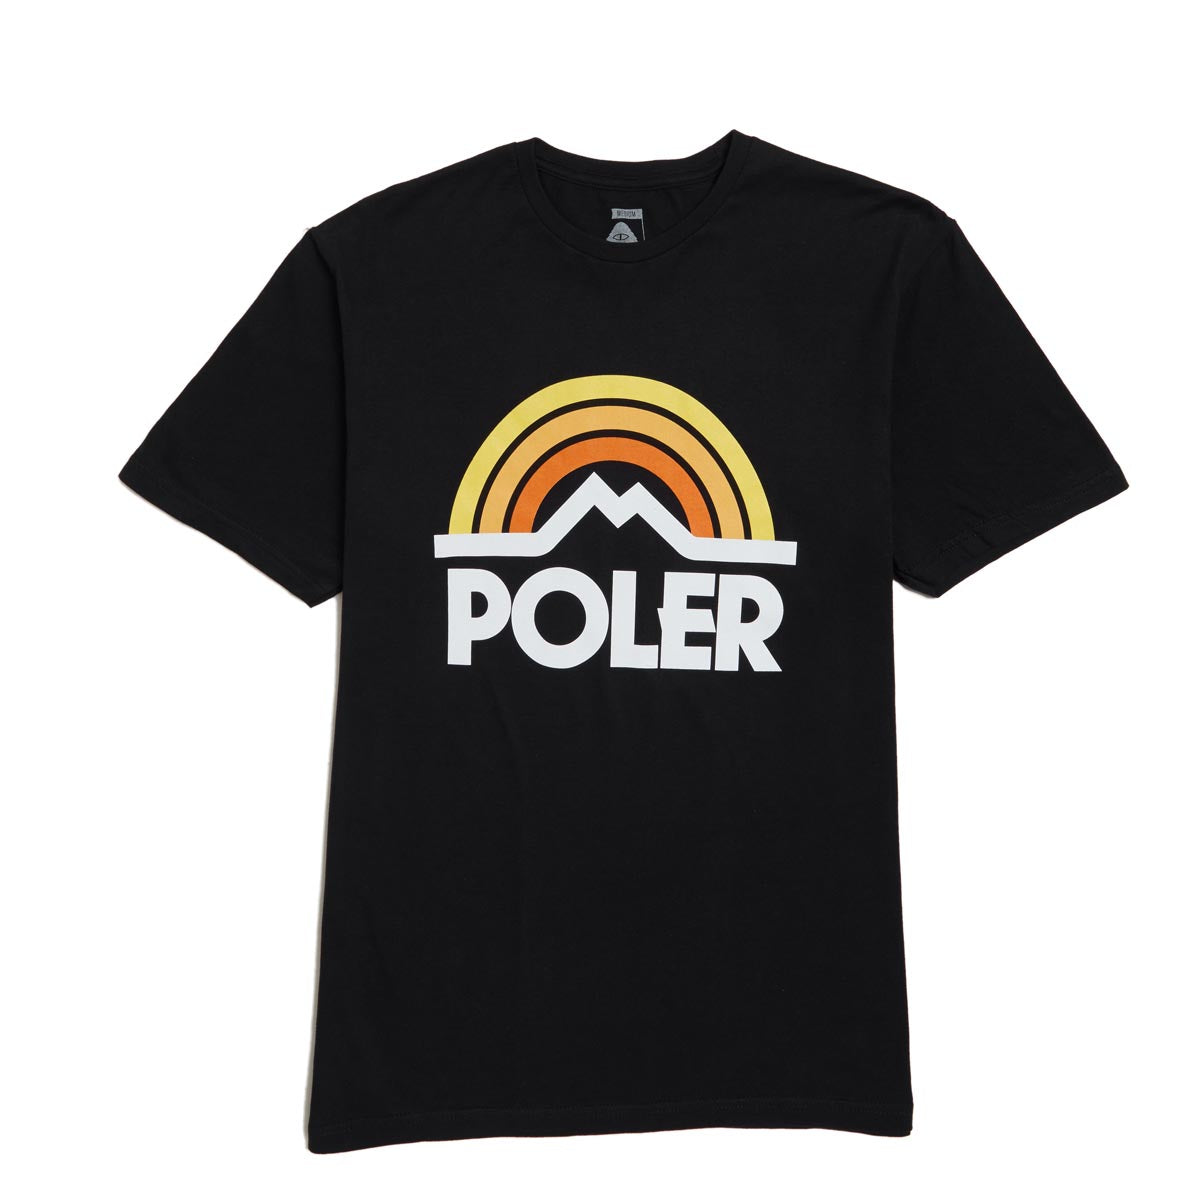 Poler Mountain Rainbow T-Shirt - Black image 1